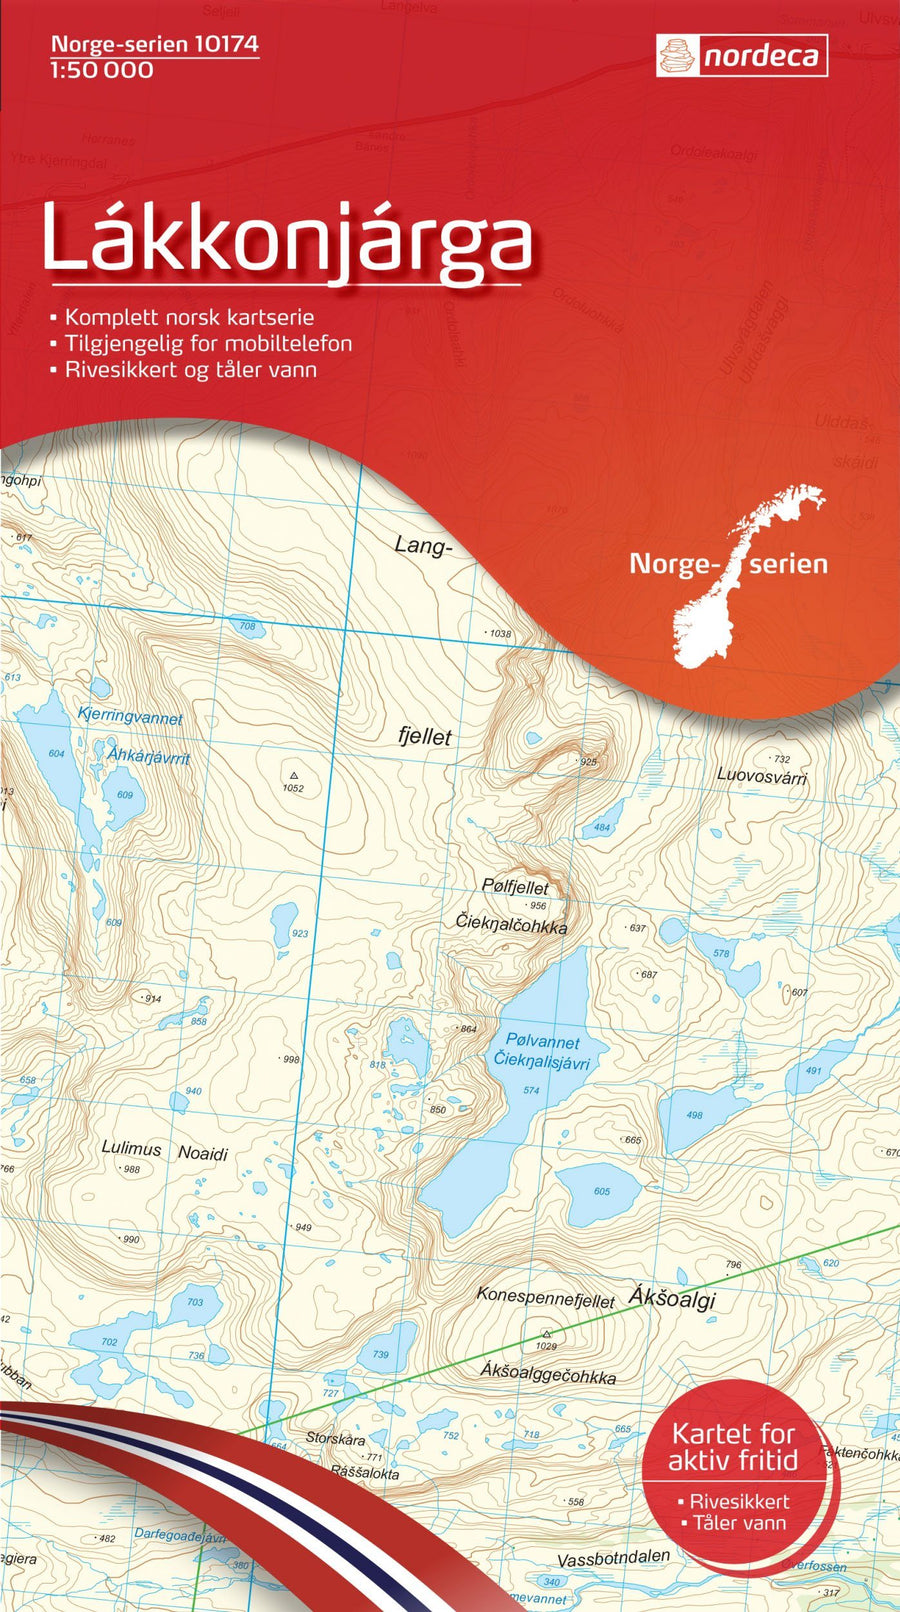 Carte de randonnée n° 10174 - Lakkonjarga (Norvège) | Nordeca - Norge-serien carte pliée Nordeca 